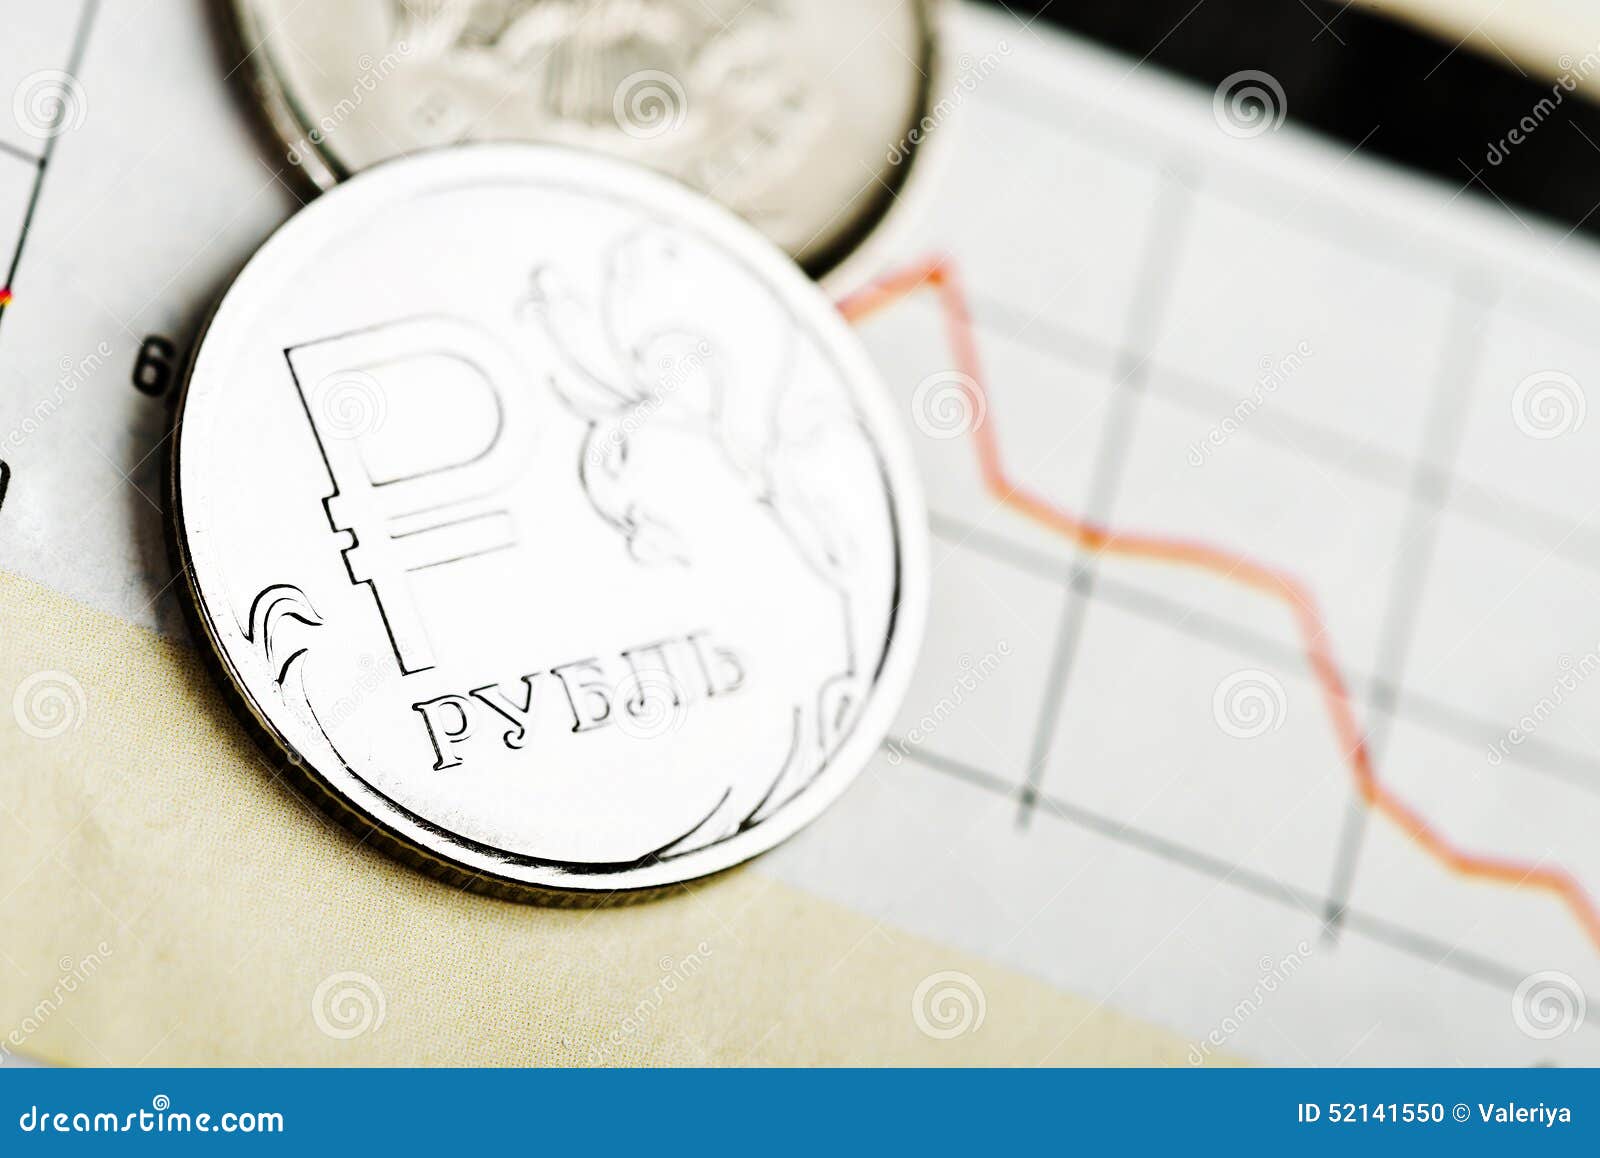 ruble exchange rate